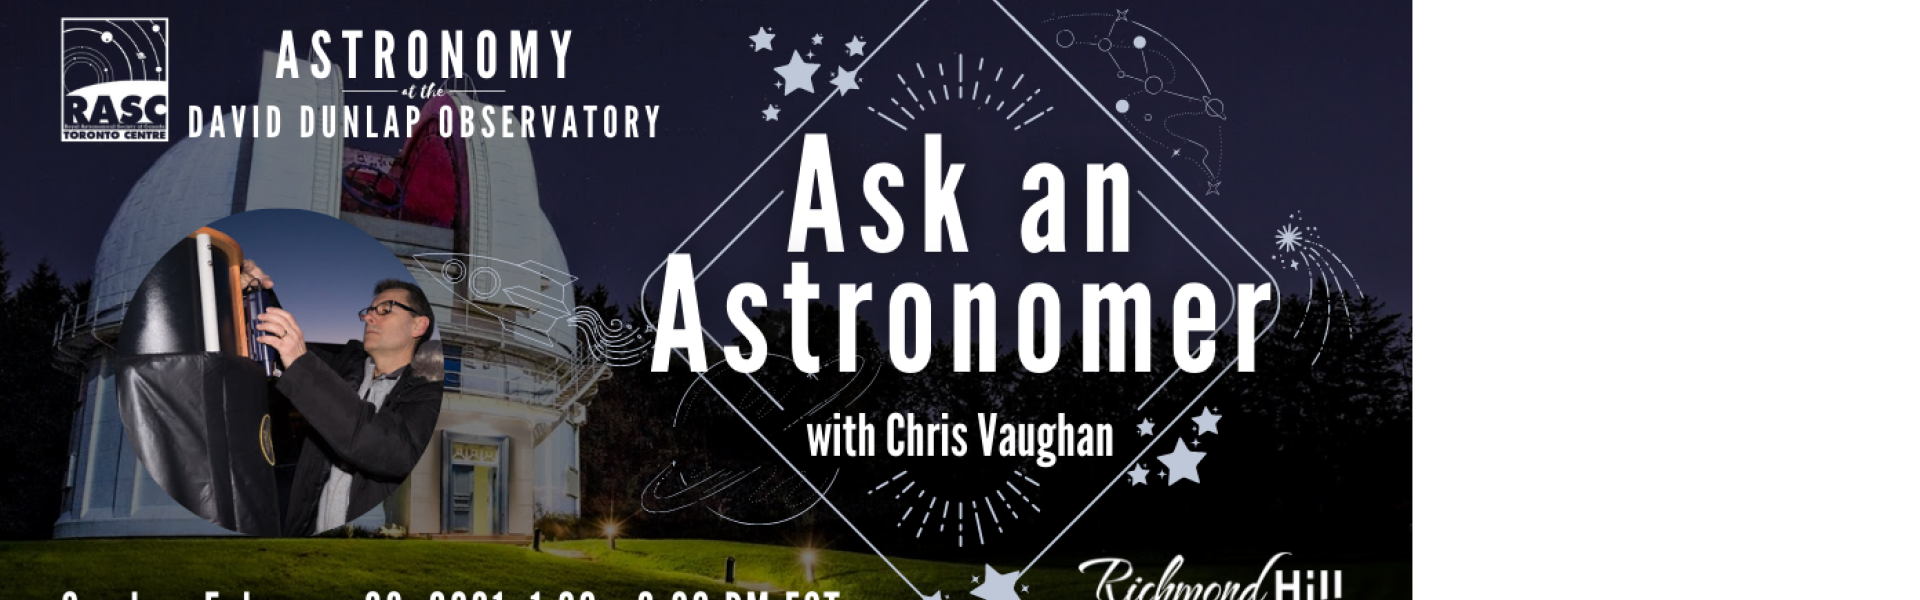 Ask an Astronomer Feb28